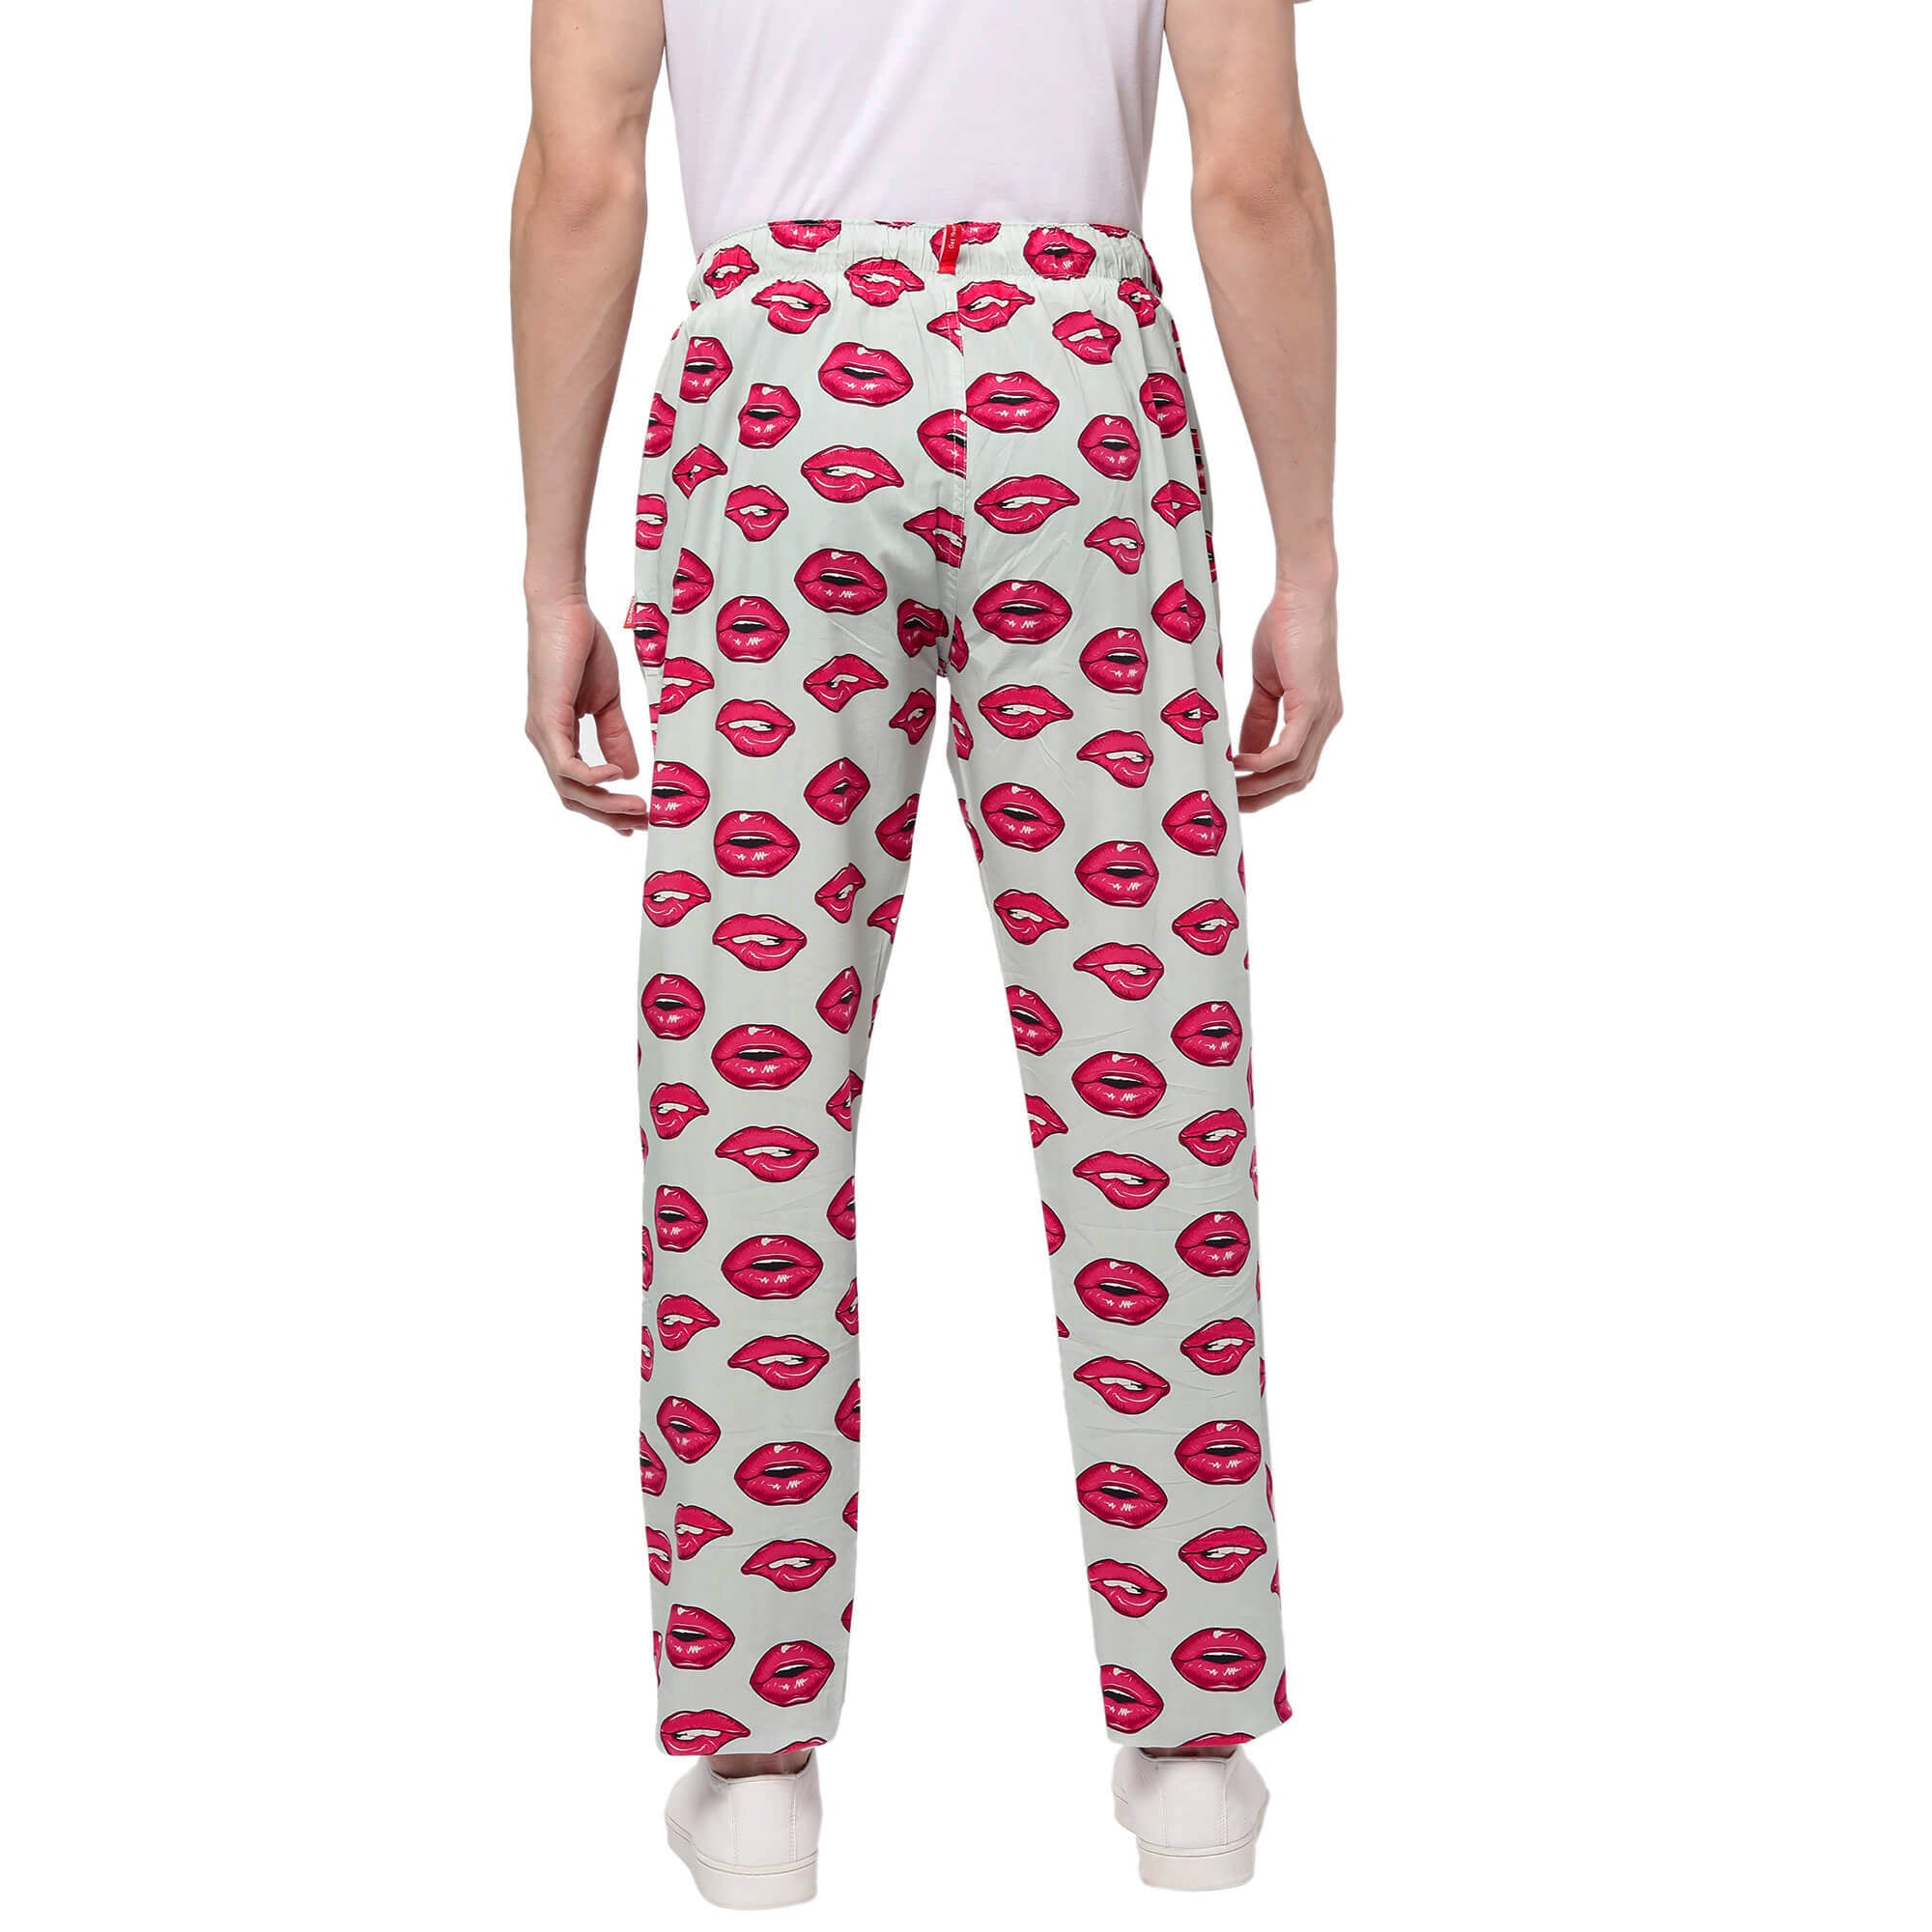  Funky Pyjamas for Men